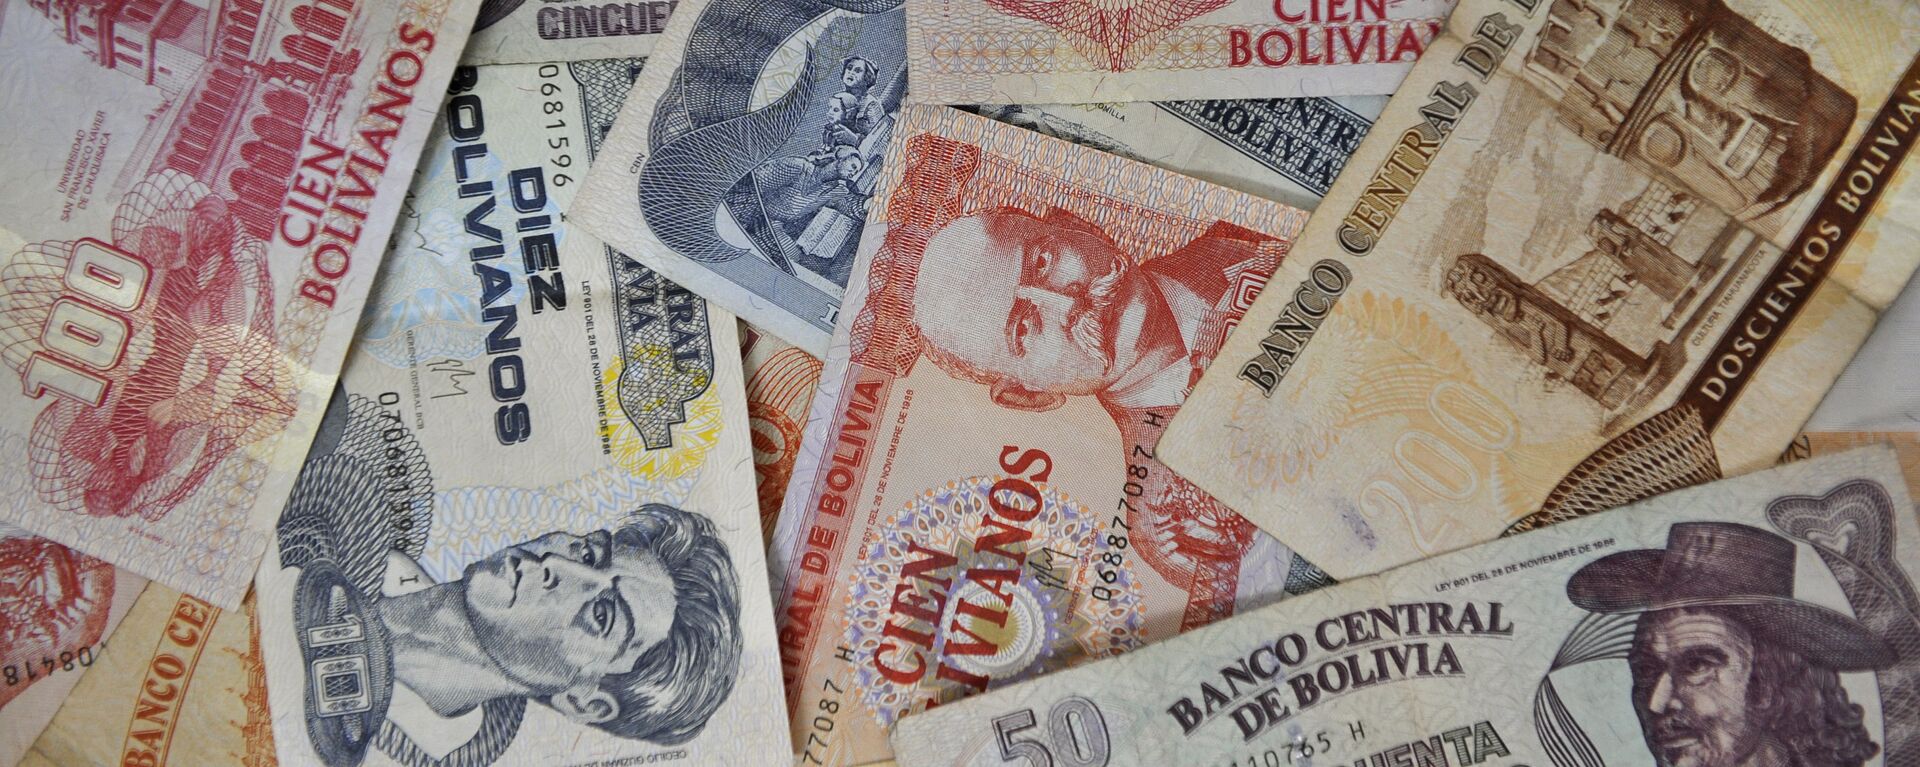 Bolivianos (billetes) - Sputnik Mundo, 1920, 17.09.2021